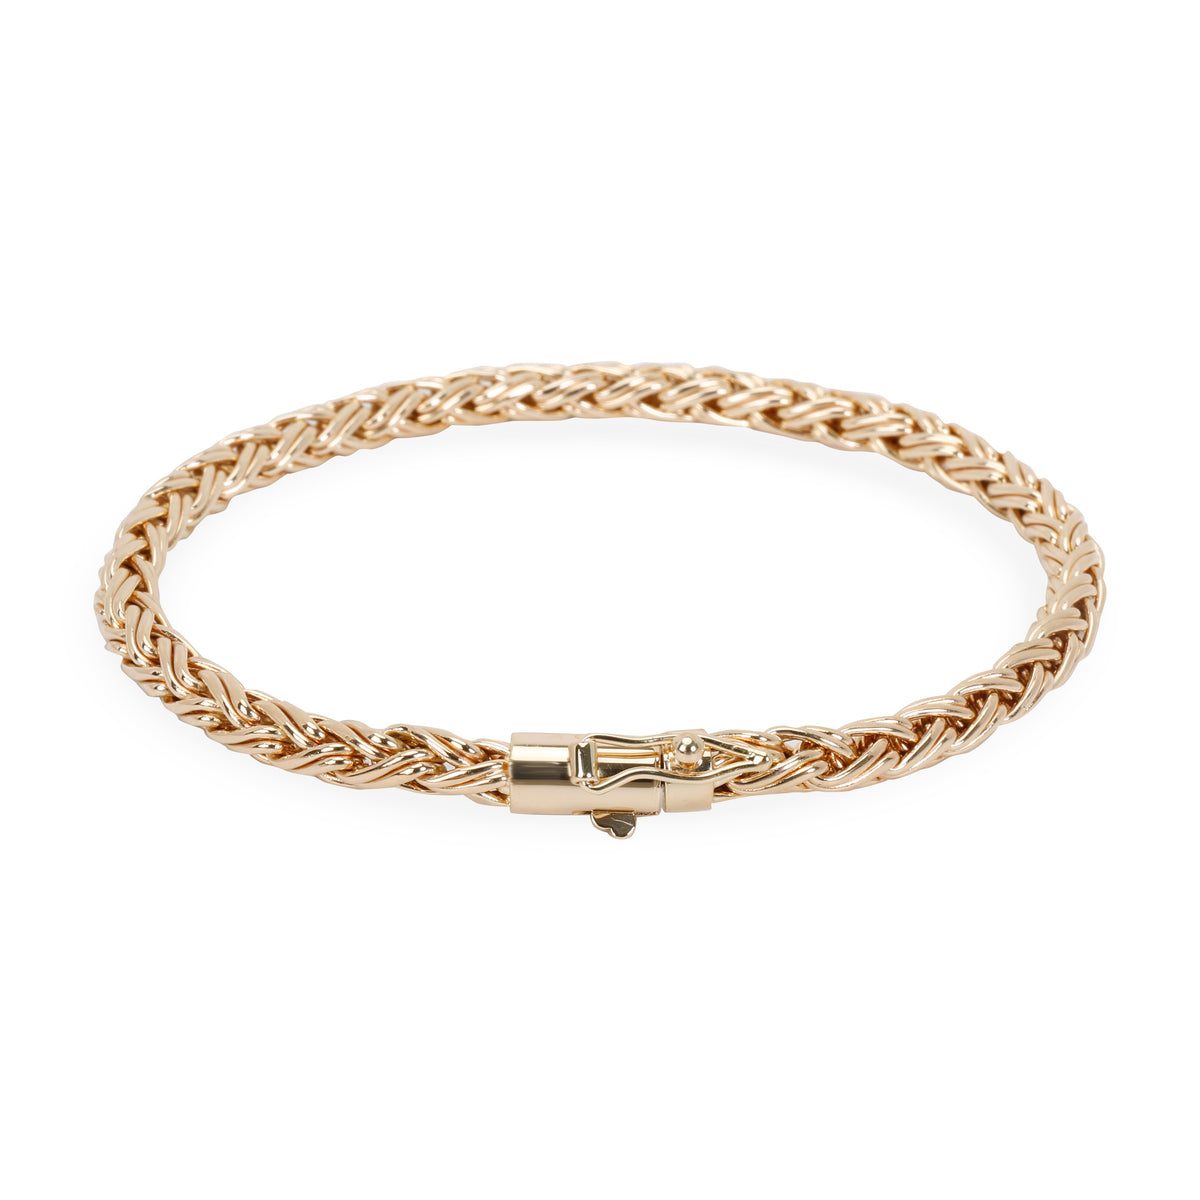 Tiffany & Co. Vintage Rope Bracelet in 14K Yellow Gold